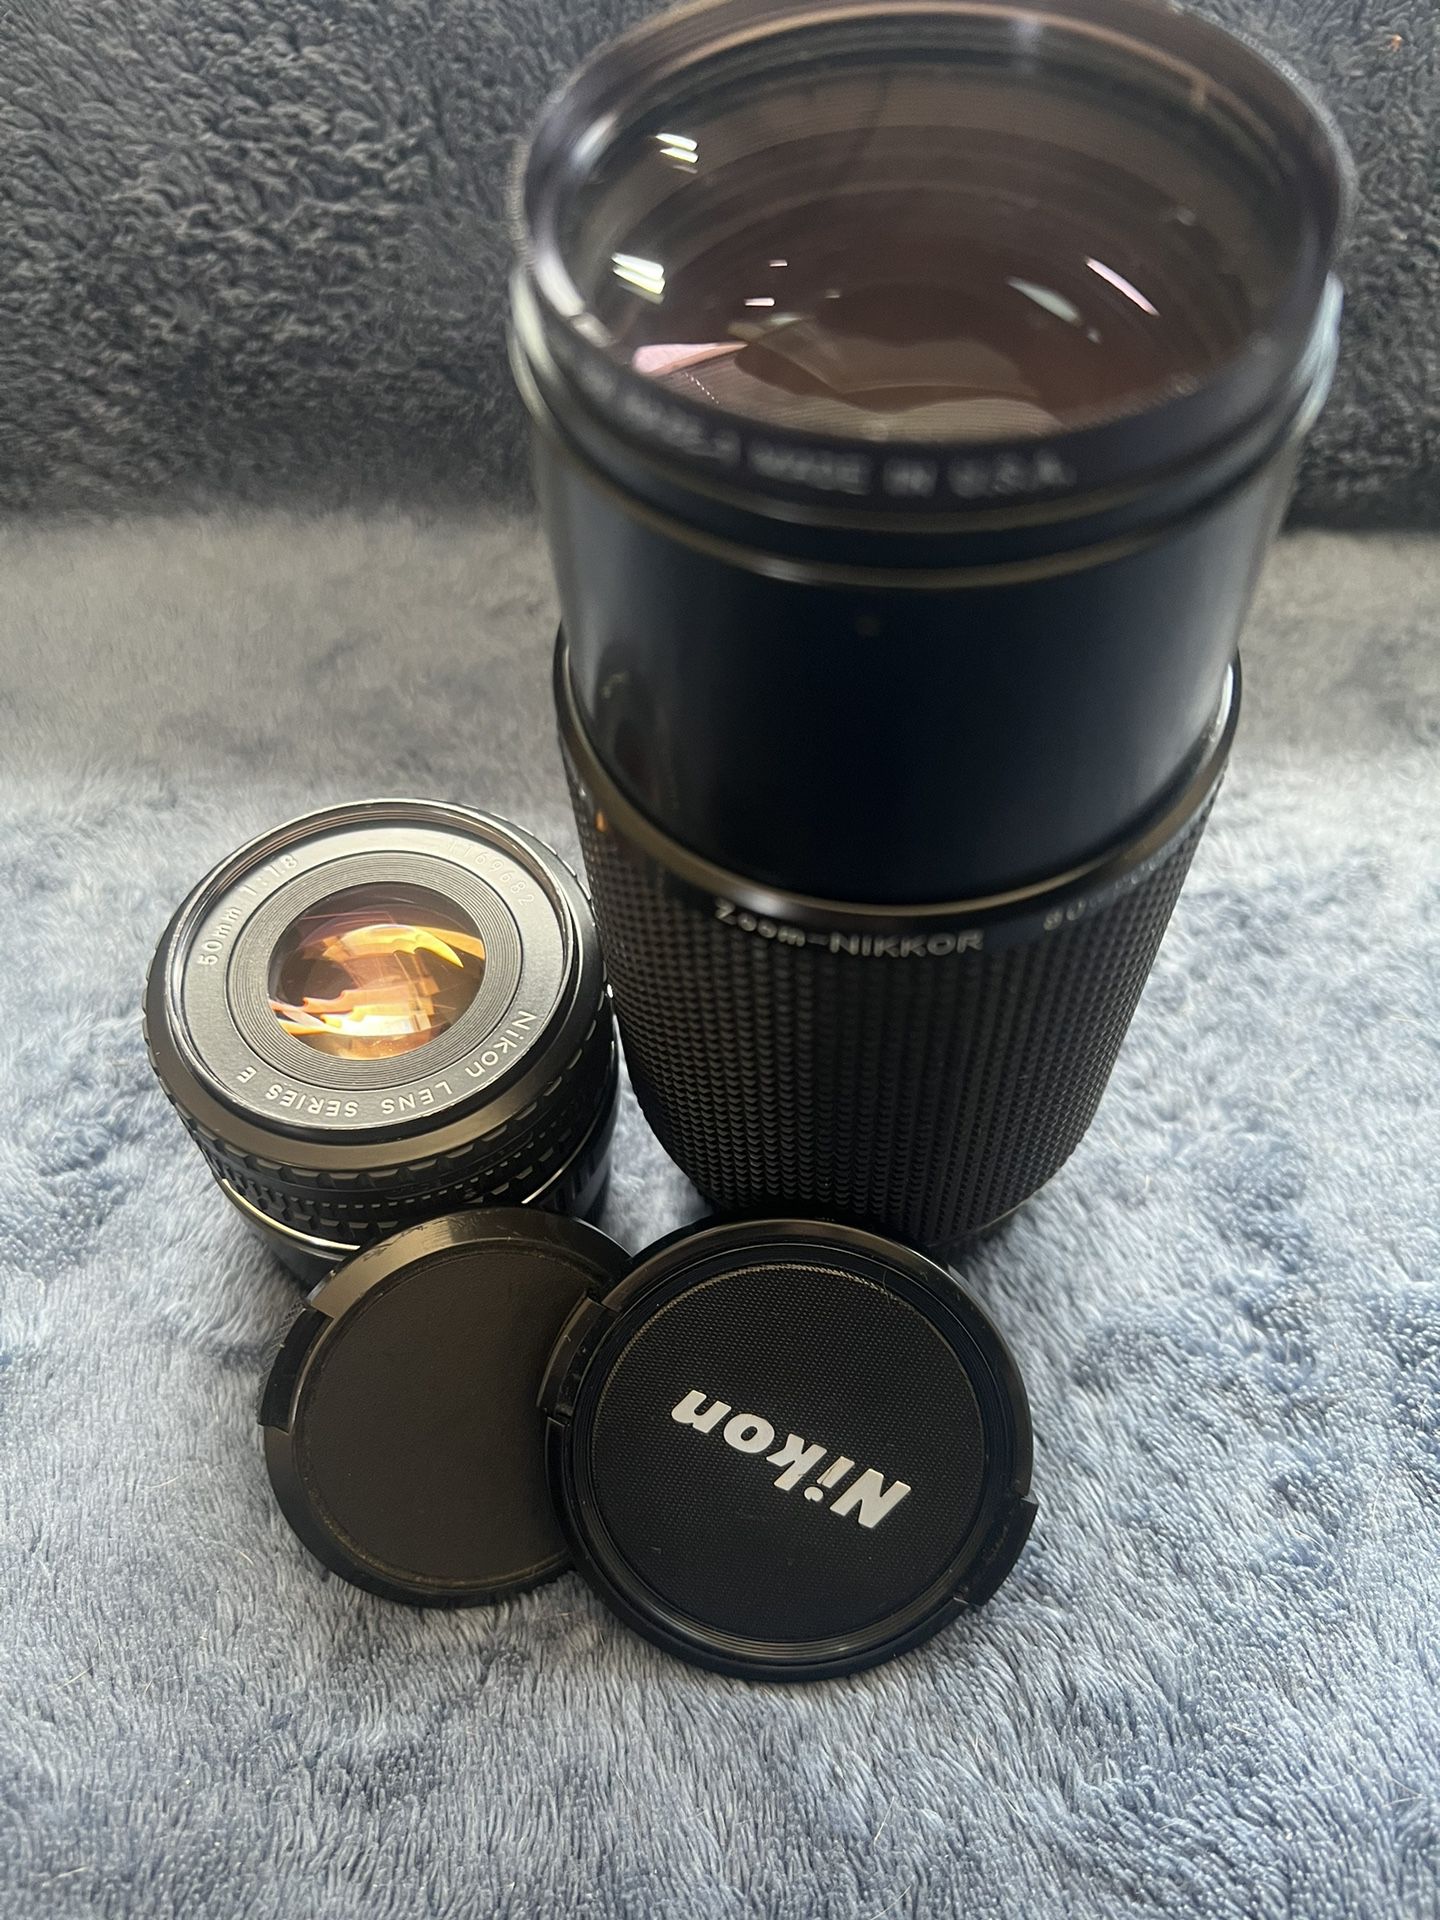 Nikon 50mm F1.8 Prime and 80-200 F4 Zoom Lenses